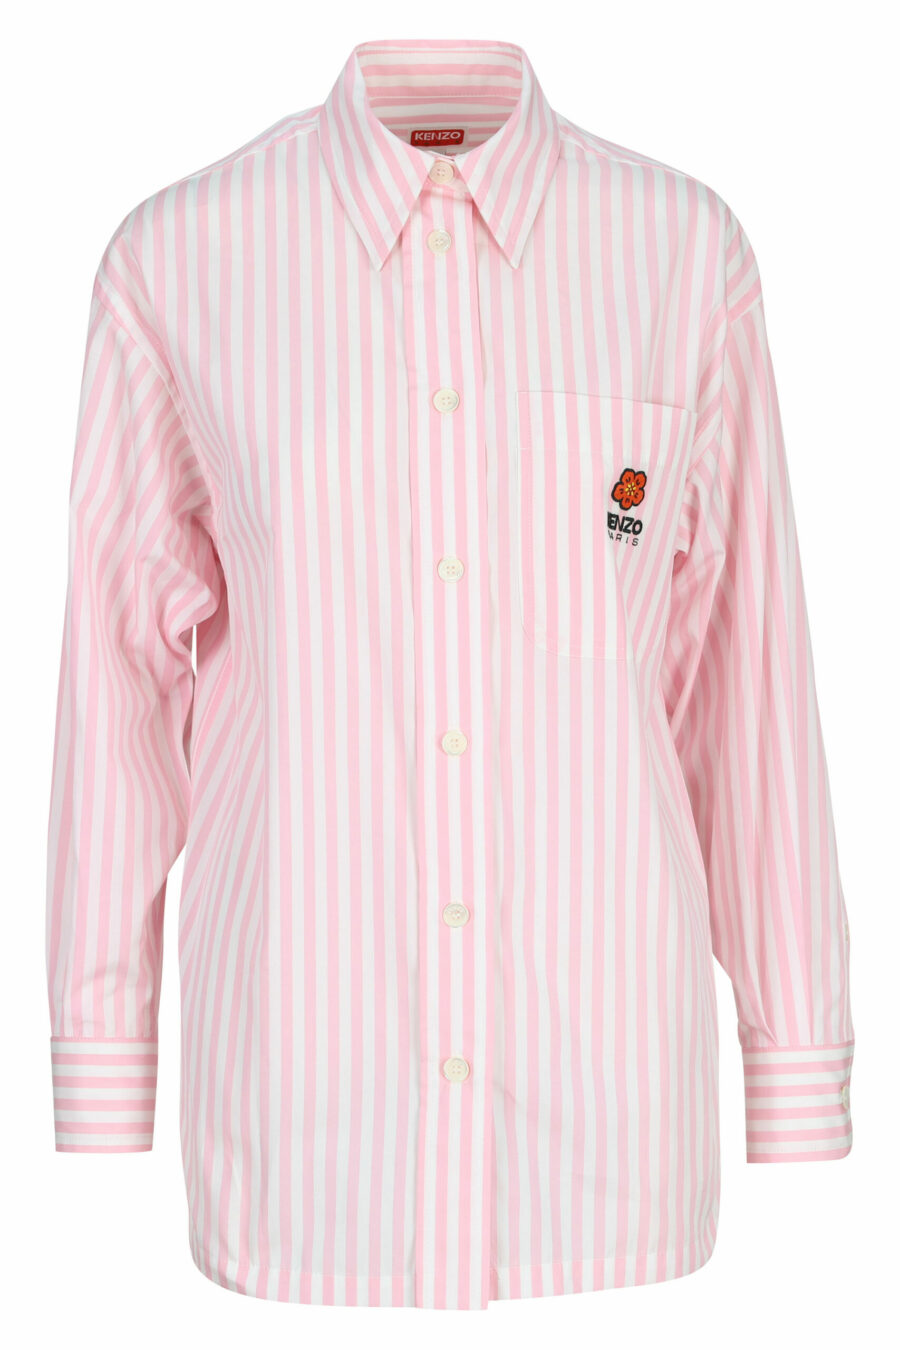 Oversize pink shirt with mini-logo "boke flower" - 3612230589674 scaled